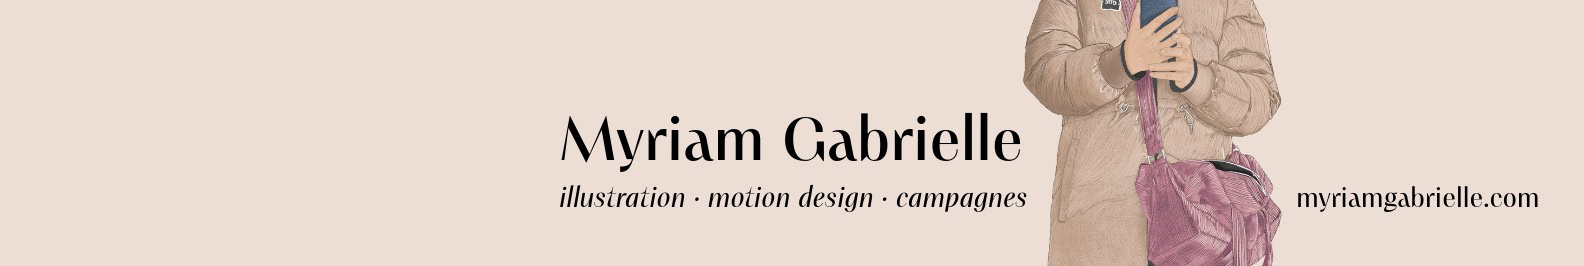 Myriam Gabrielle P's profile banner